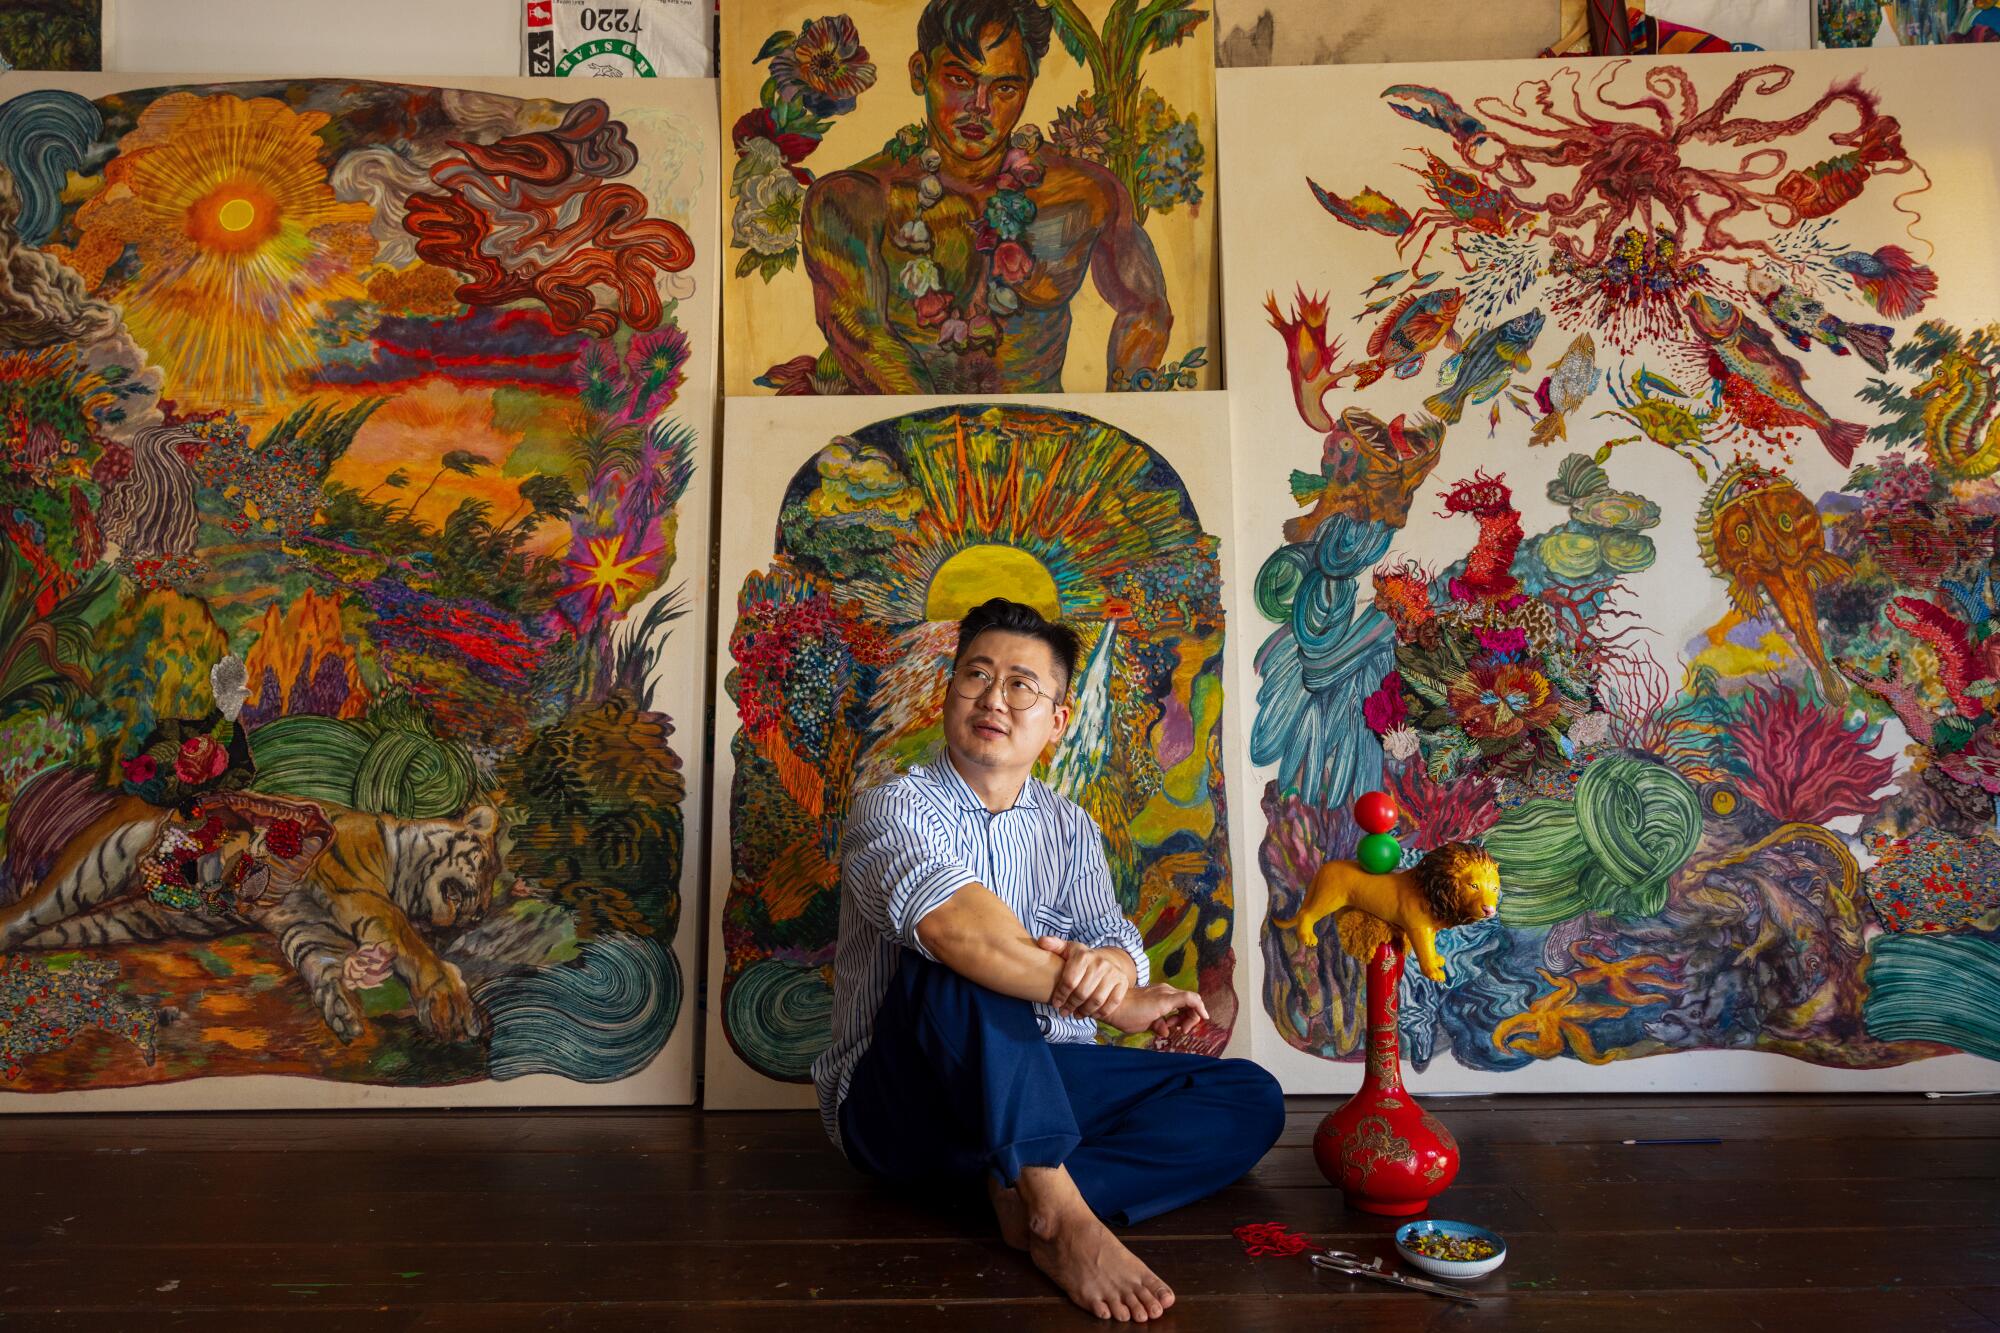 Artist Ken Gun Min sits in front of colorful paintings in his studio